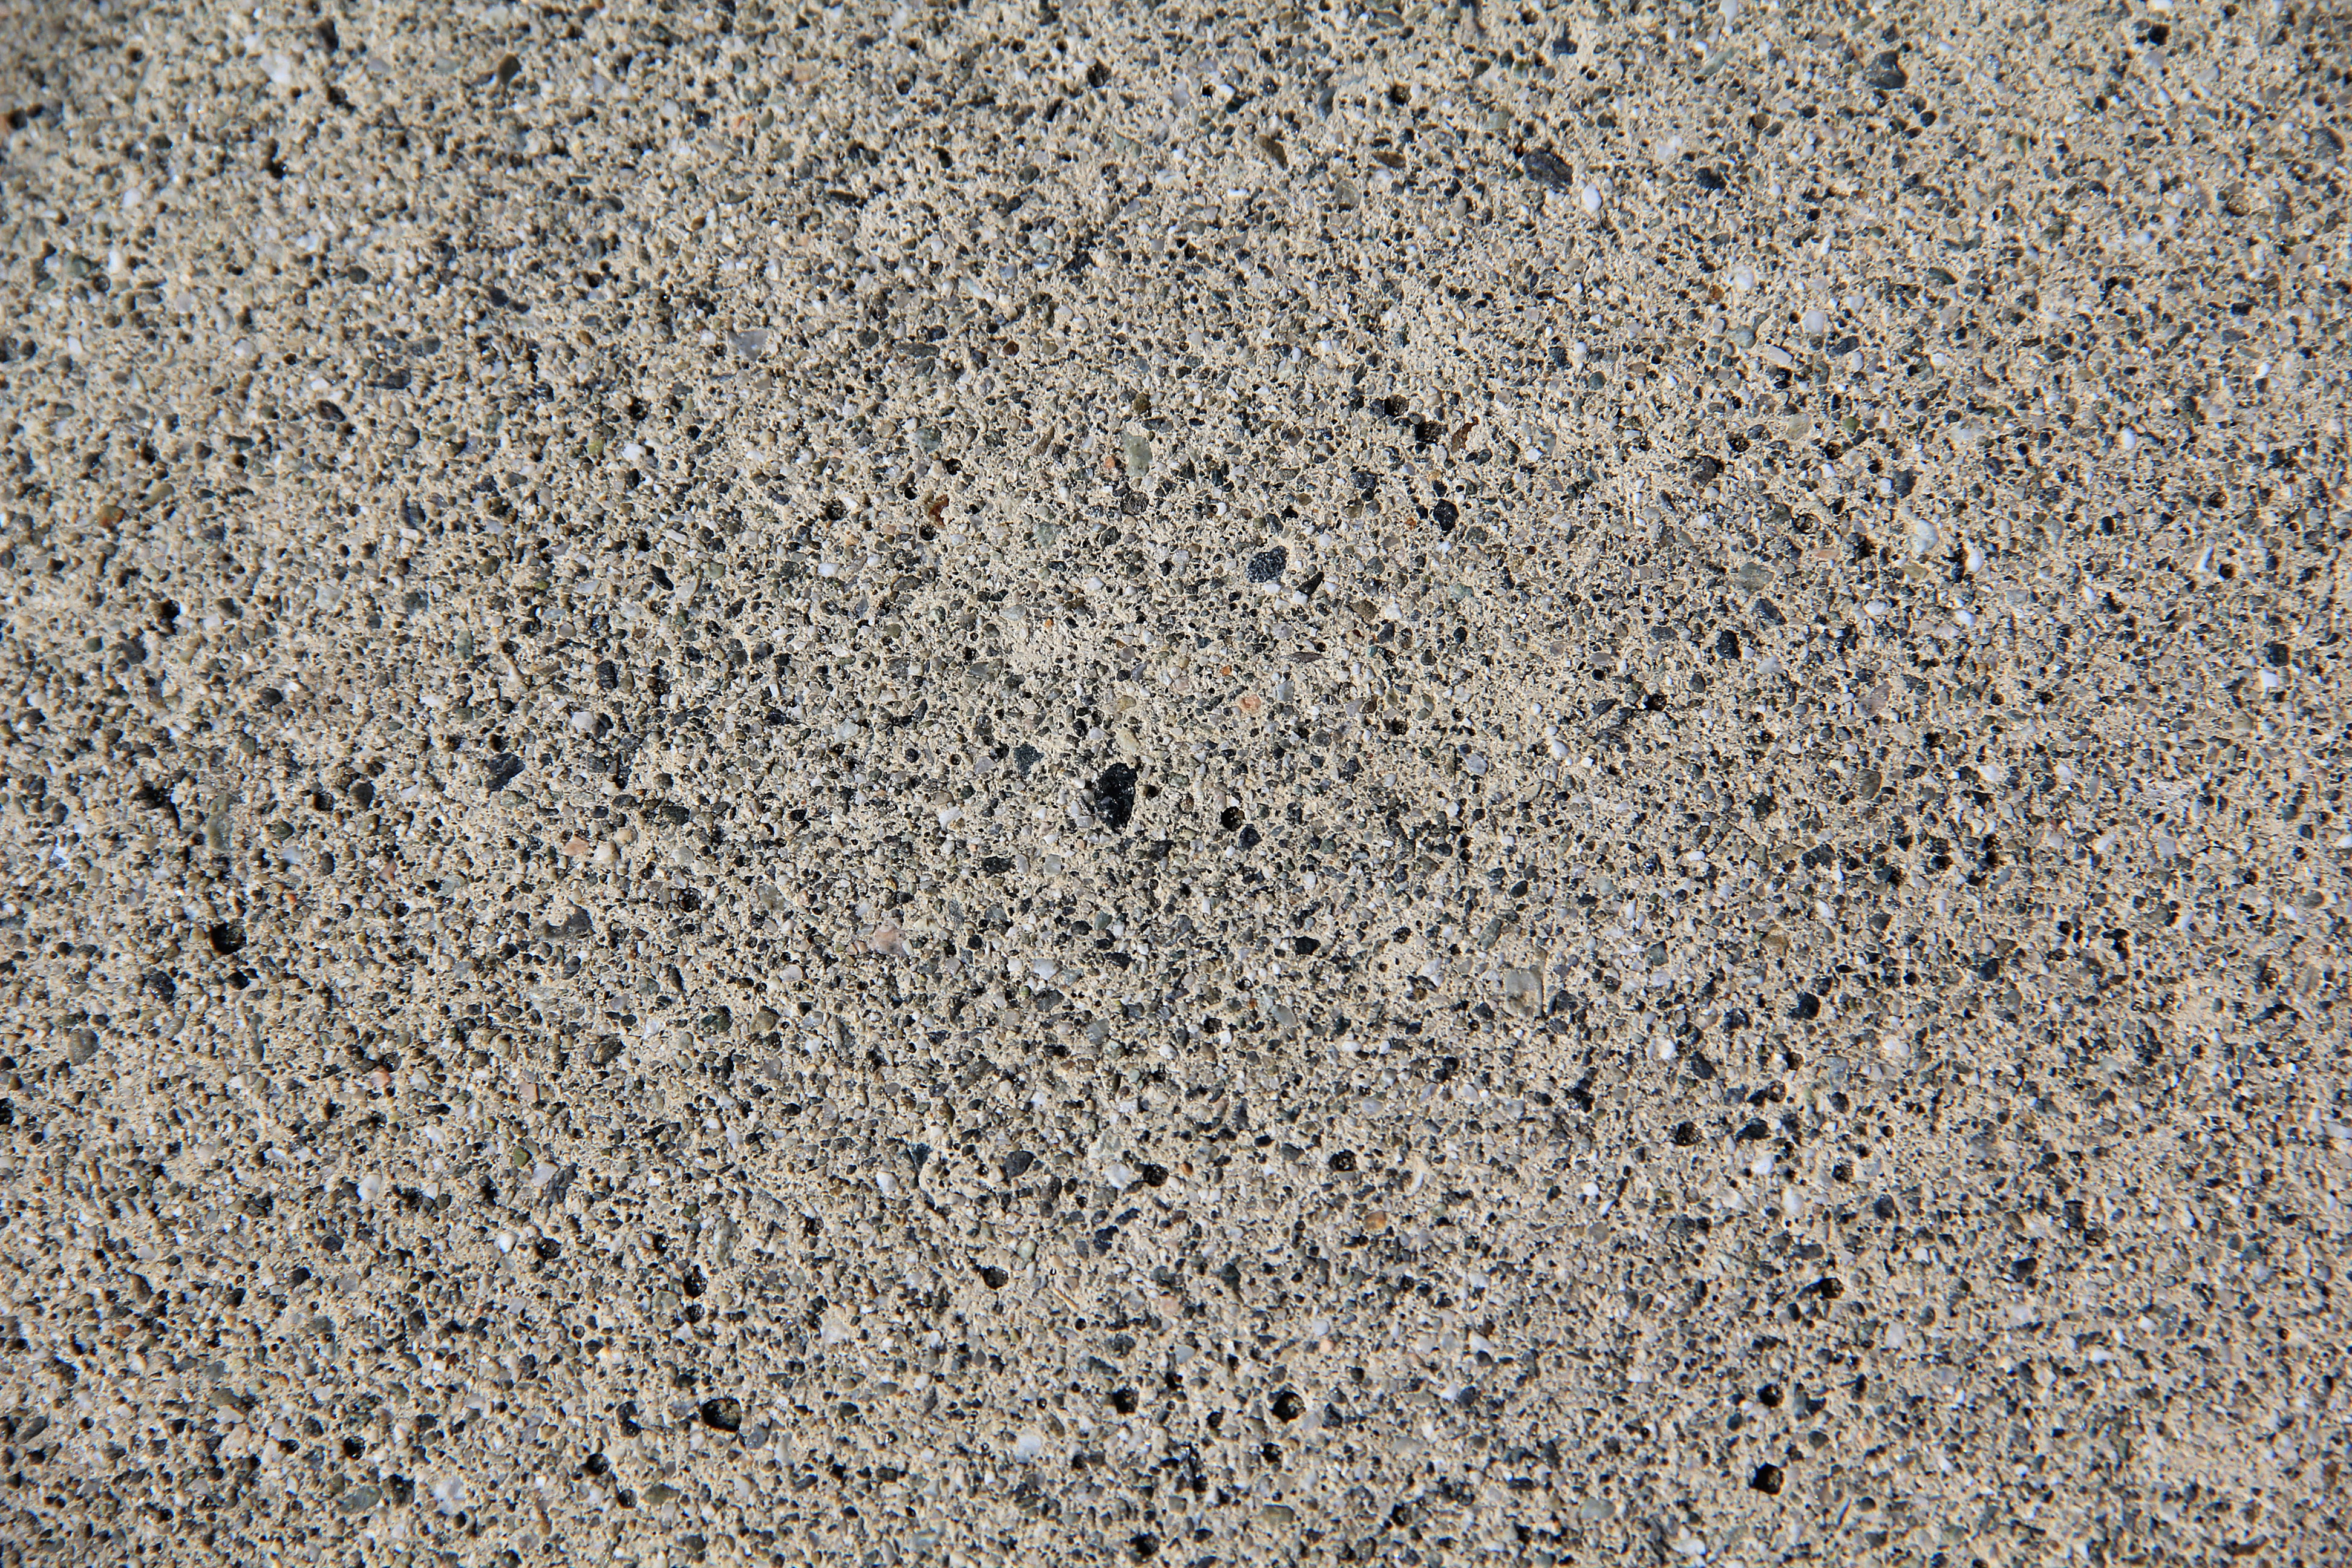 Texturex gravel texture rock gravel street sidewalk grey concrete Texture - Texture X